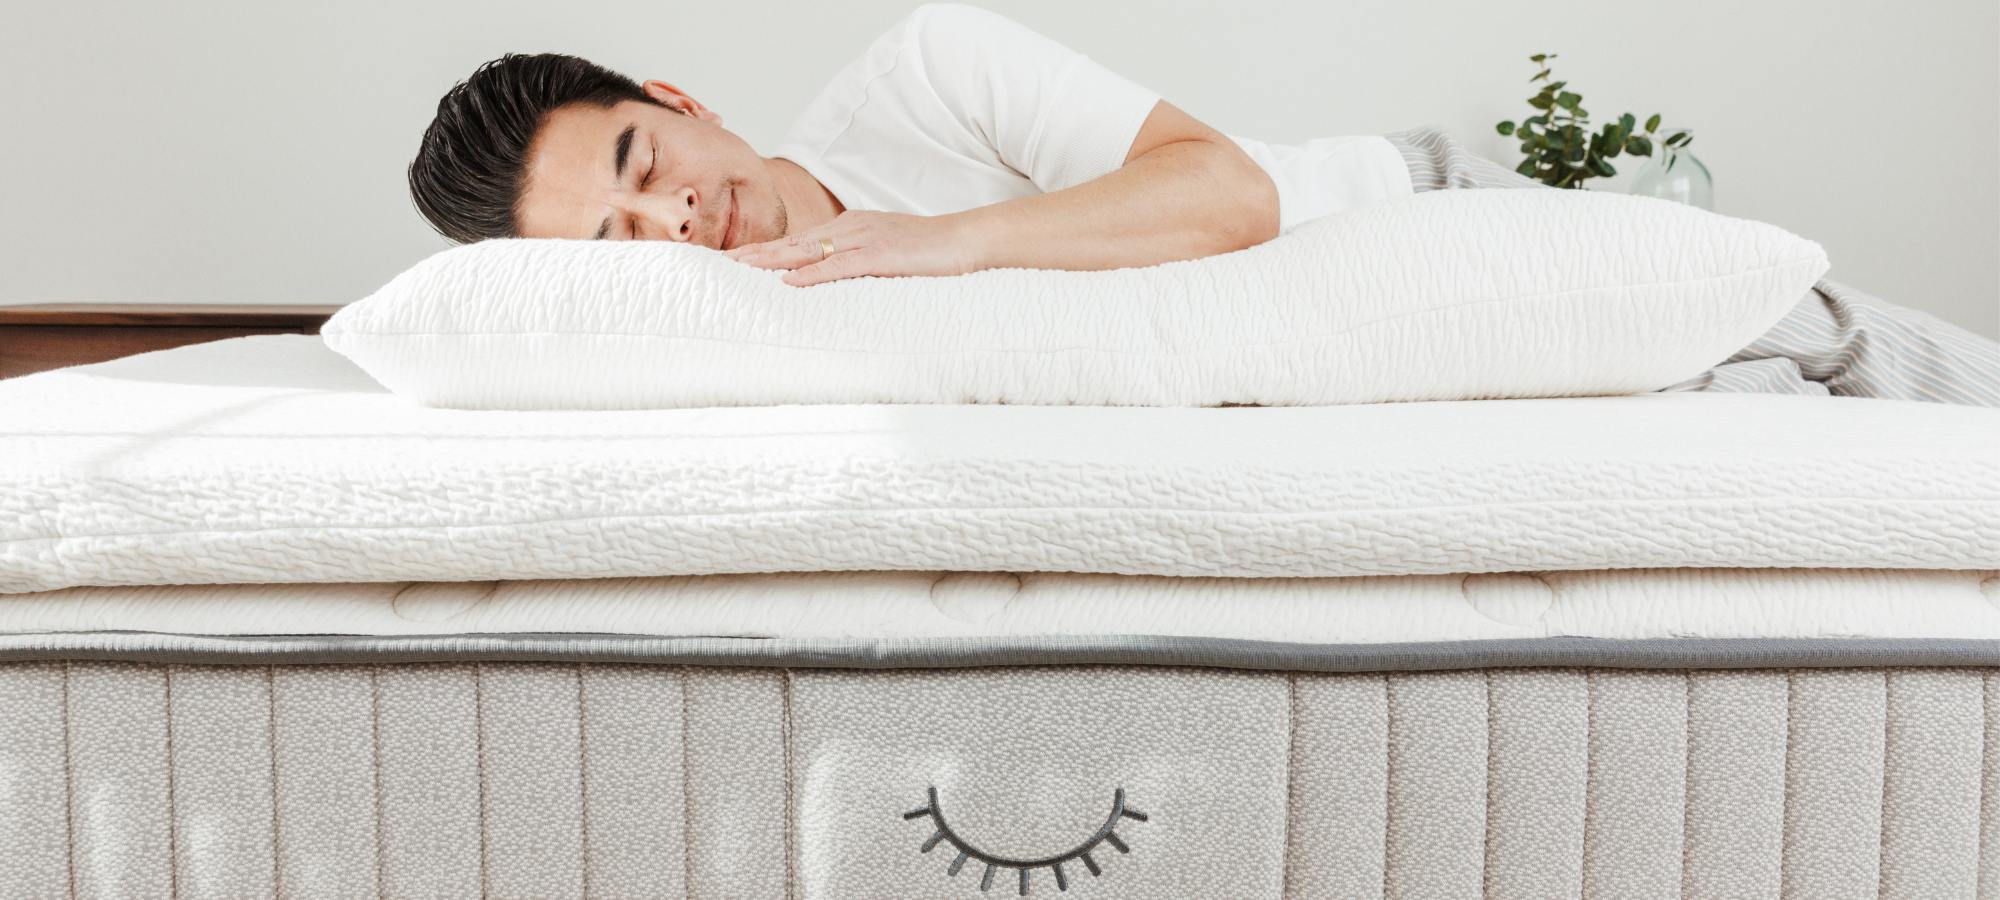 Benefits of Restorative Sleep